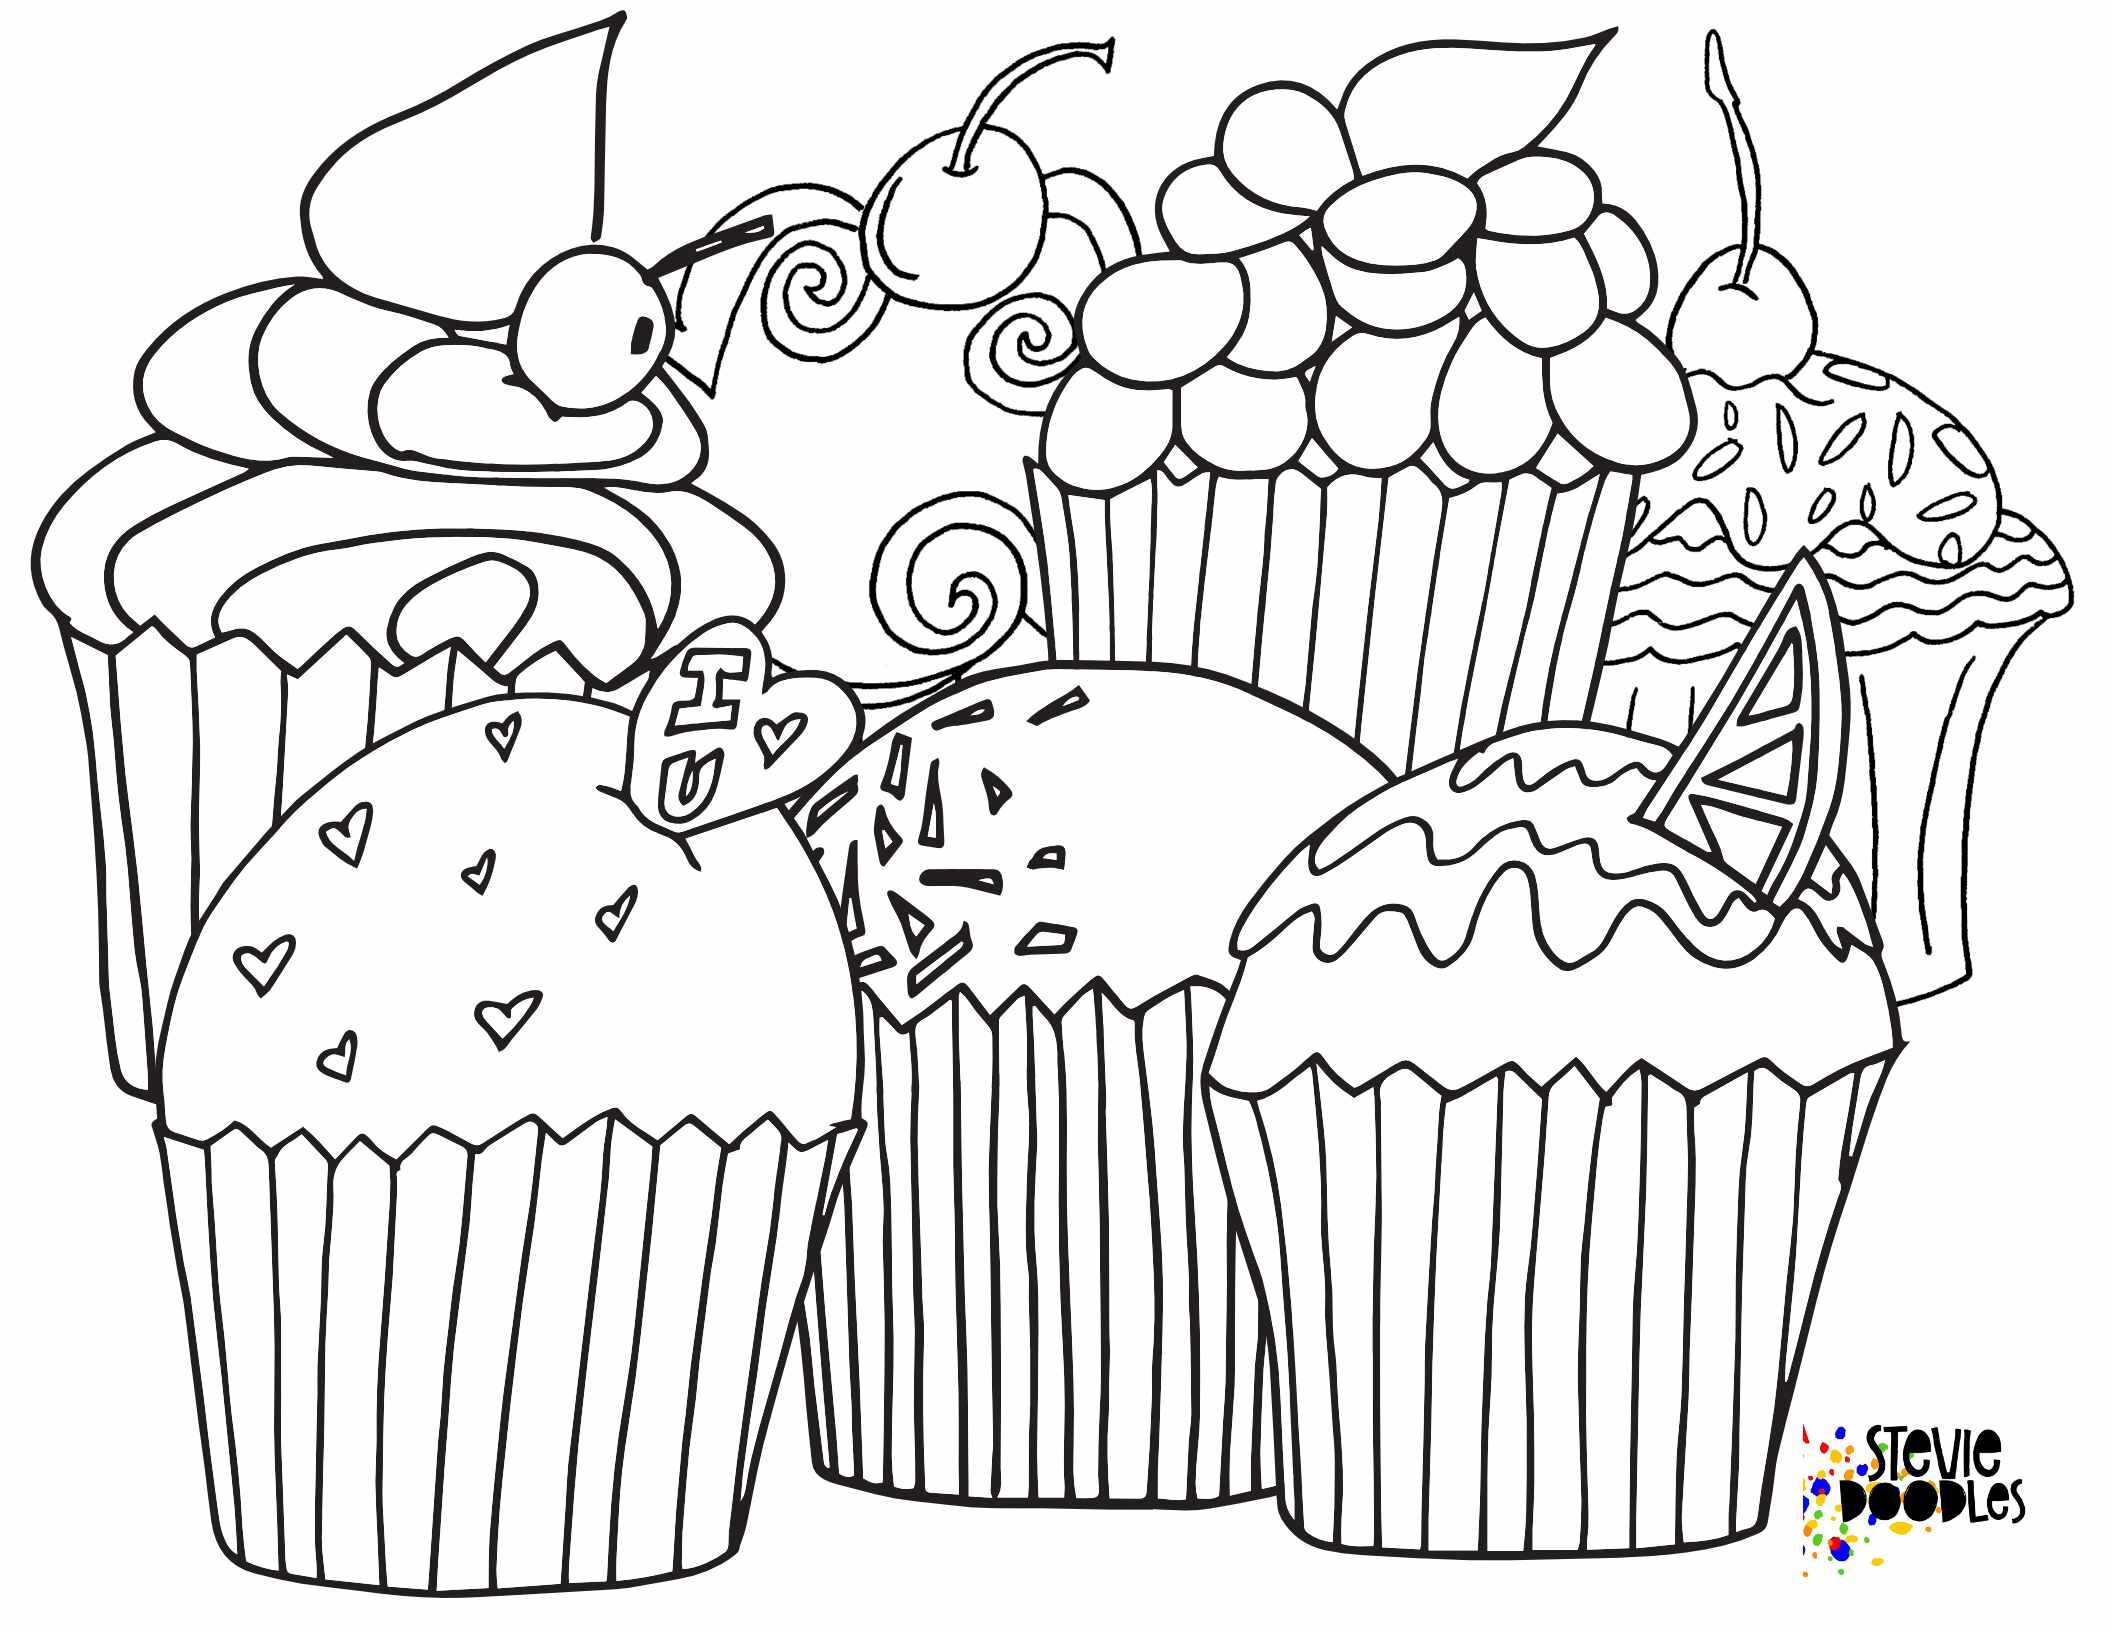 Free cupcake coloring pages â stevie doodles